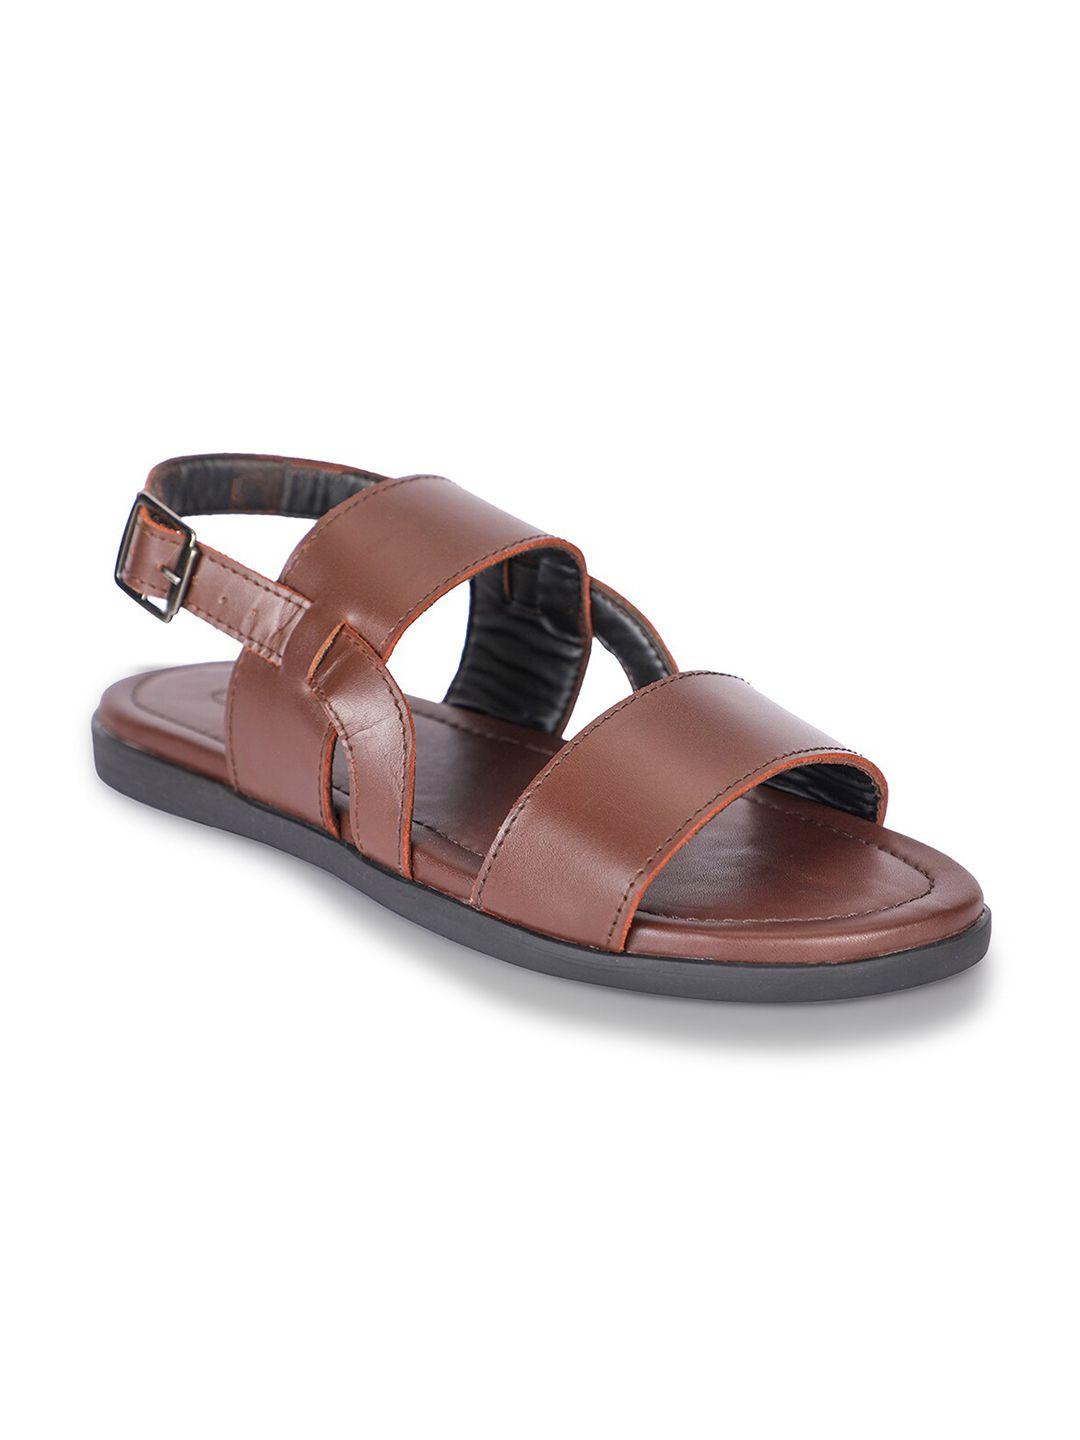 beaver men leather comfort sandals